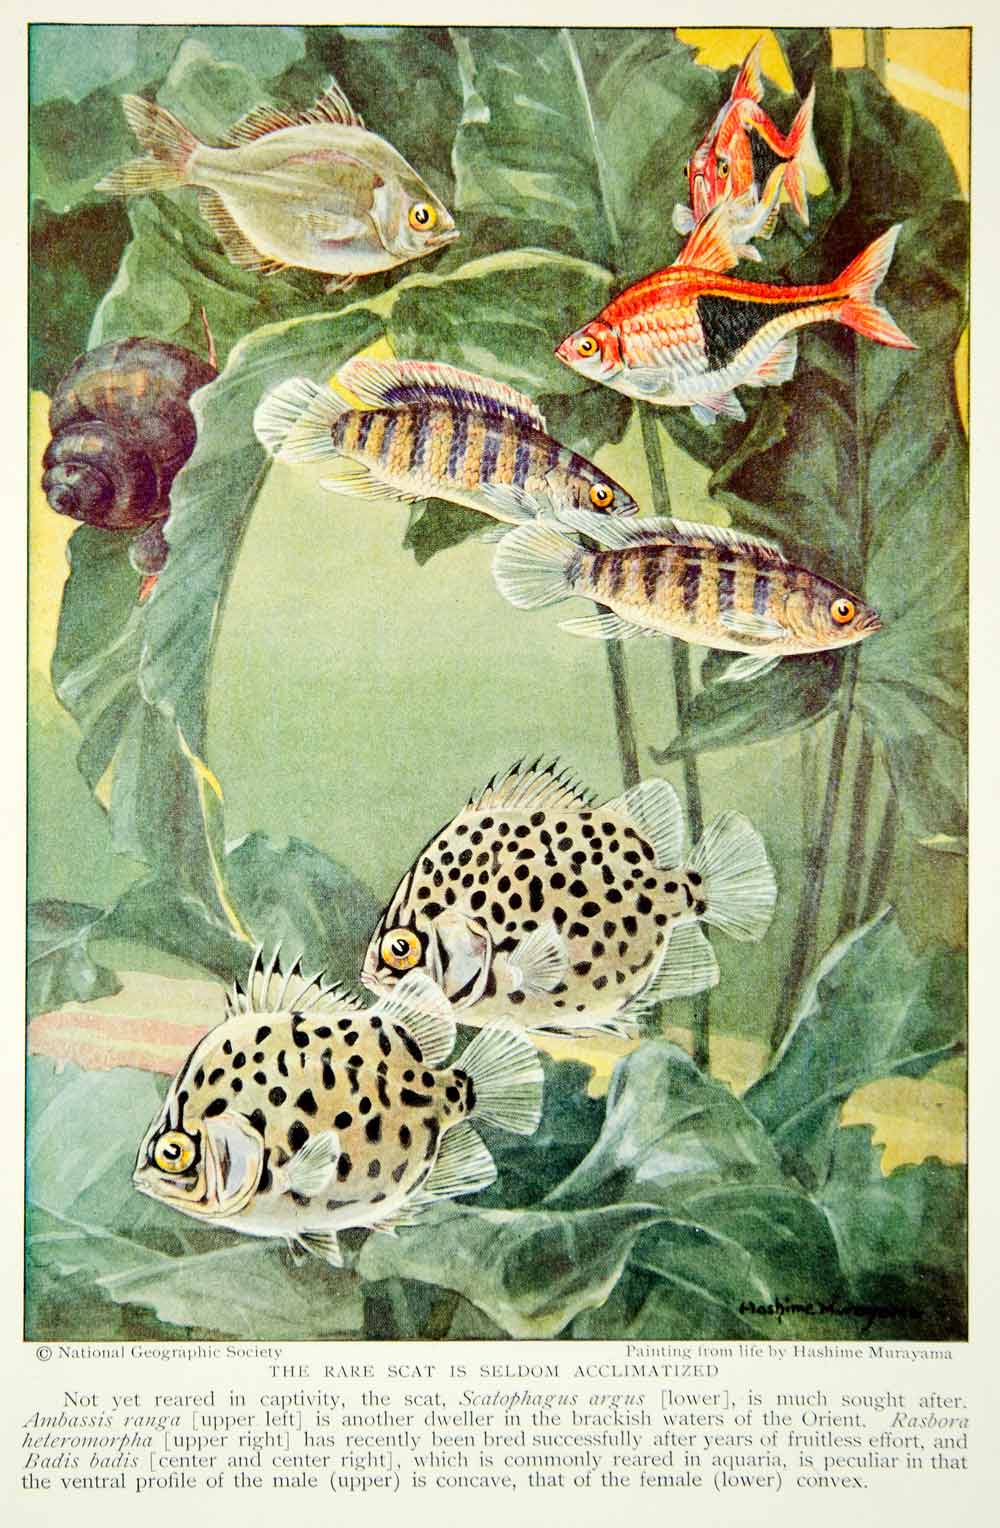 1931 Color Print Hashime Murayama Scat Scatophagus Badis Marine Fish Orient NGM7